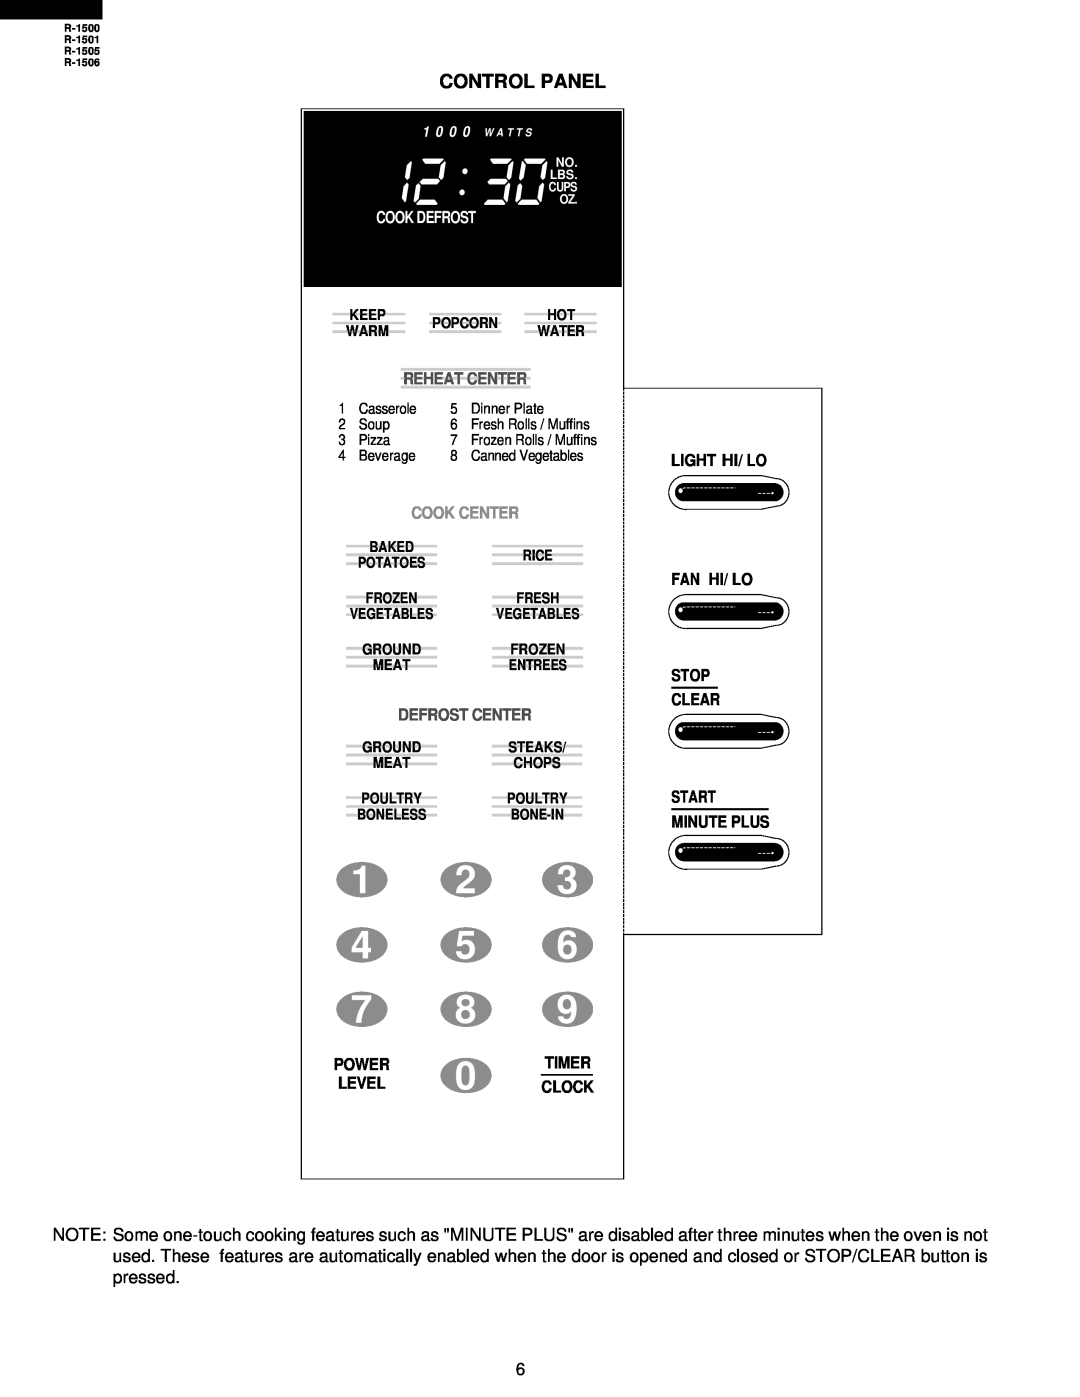 Sharp R-1500, R-1505, R-1501, R-1506 service manual Control Panel, 1 2 4, Cook Center, Defrost Center, Level 